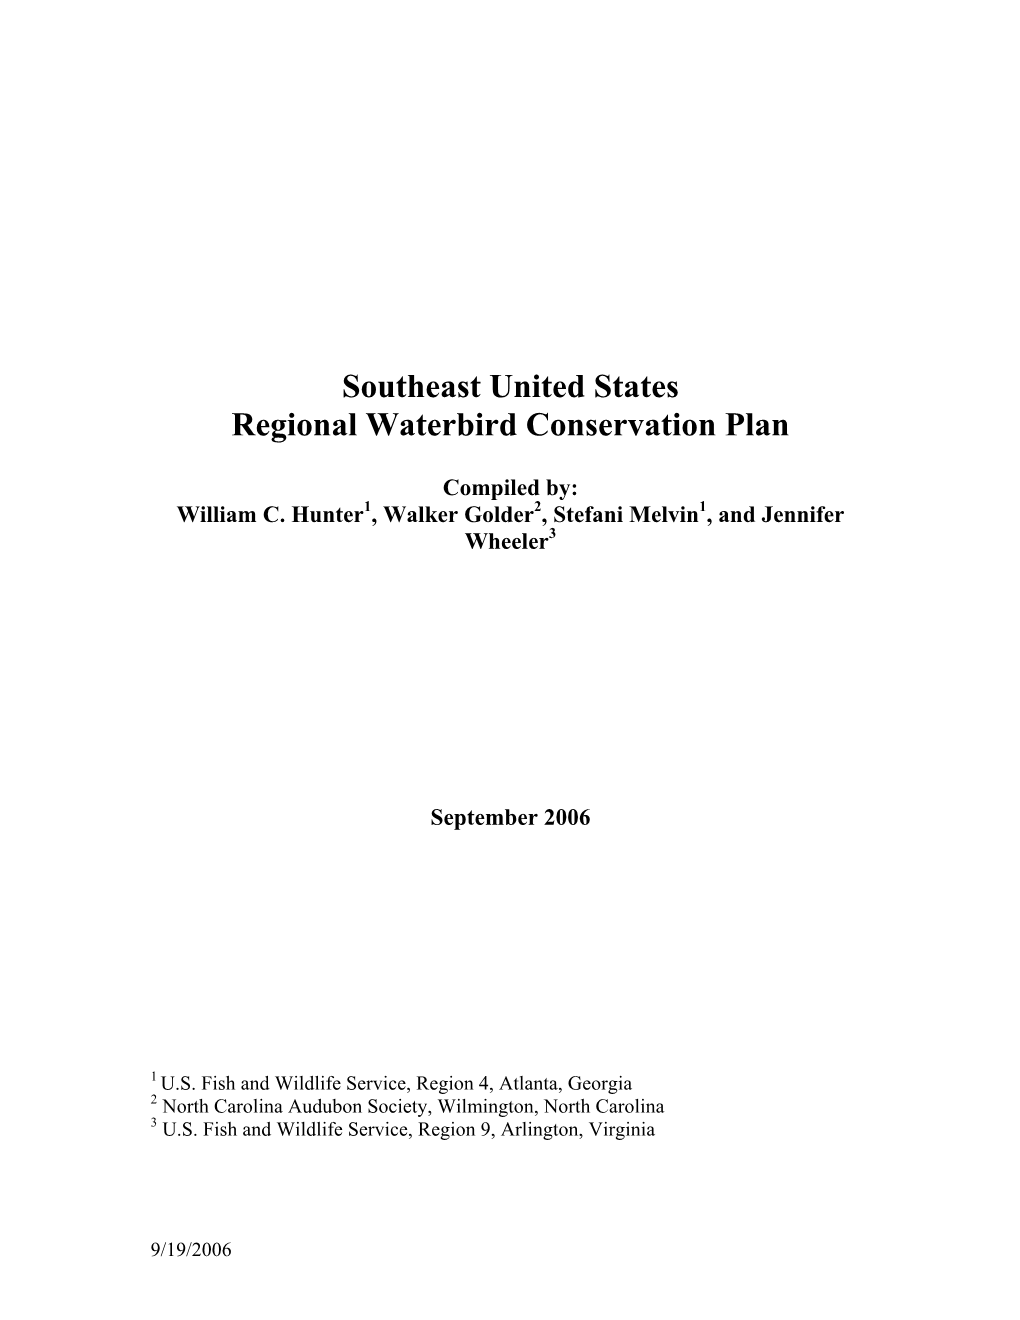 Southeast United States Regional Waterbird Conservation Plan